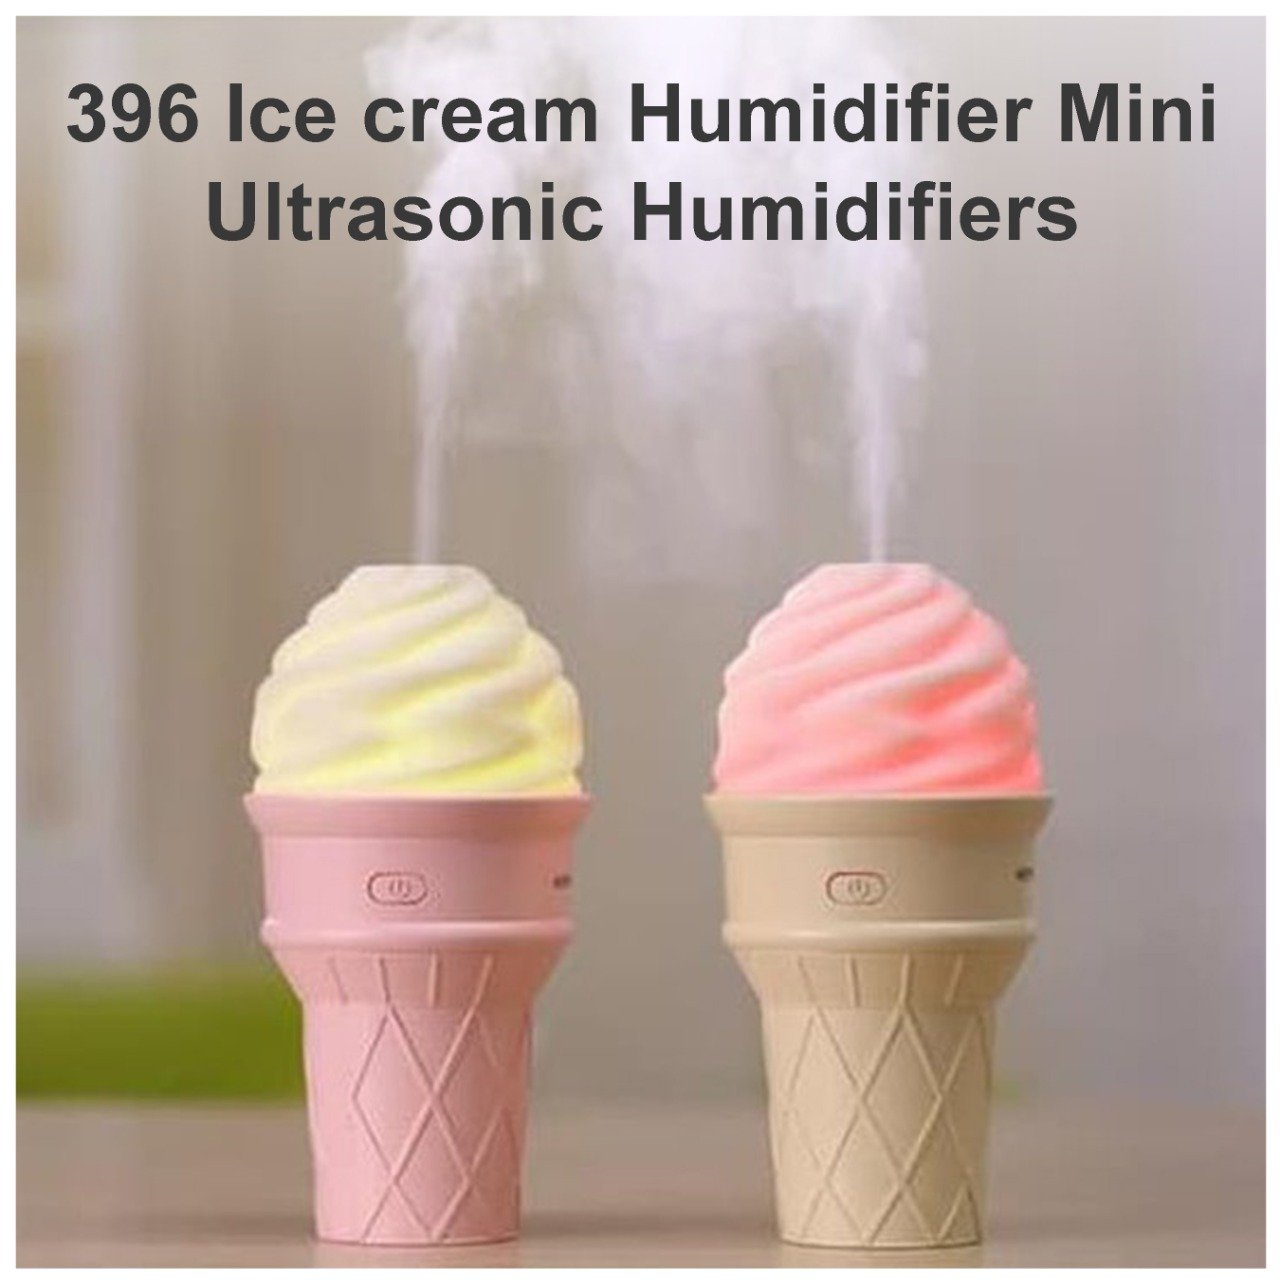 0396 Ice cream Humidifier Mini Ultrasonic Humidifiers Led Night Light Aroma Essential Oil Diffuser USB Fogger Car Air freshener - Ambitionofcreativity.in - Home Decor - Ambitionofcreativity.in